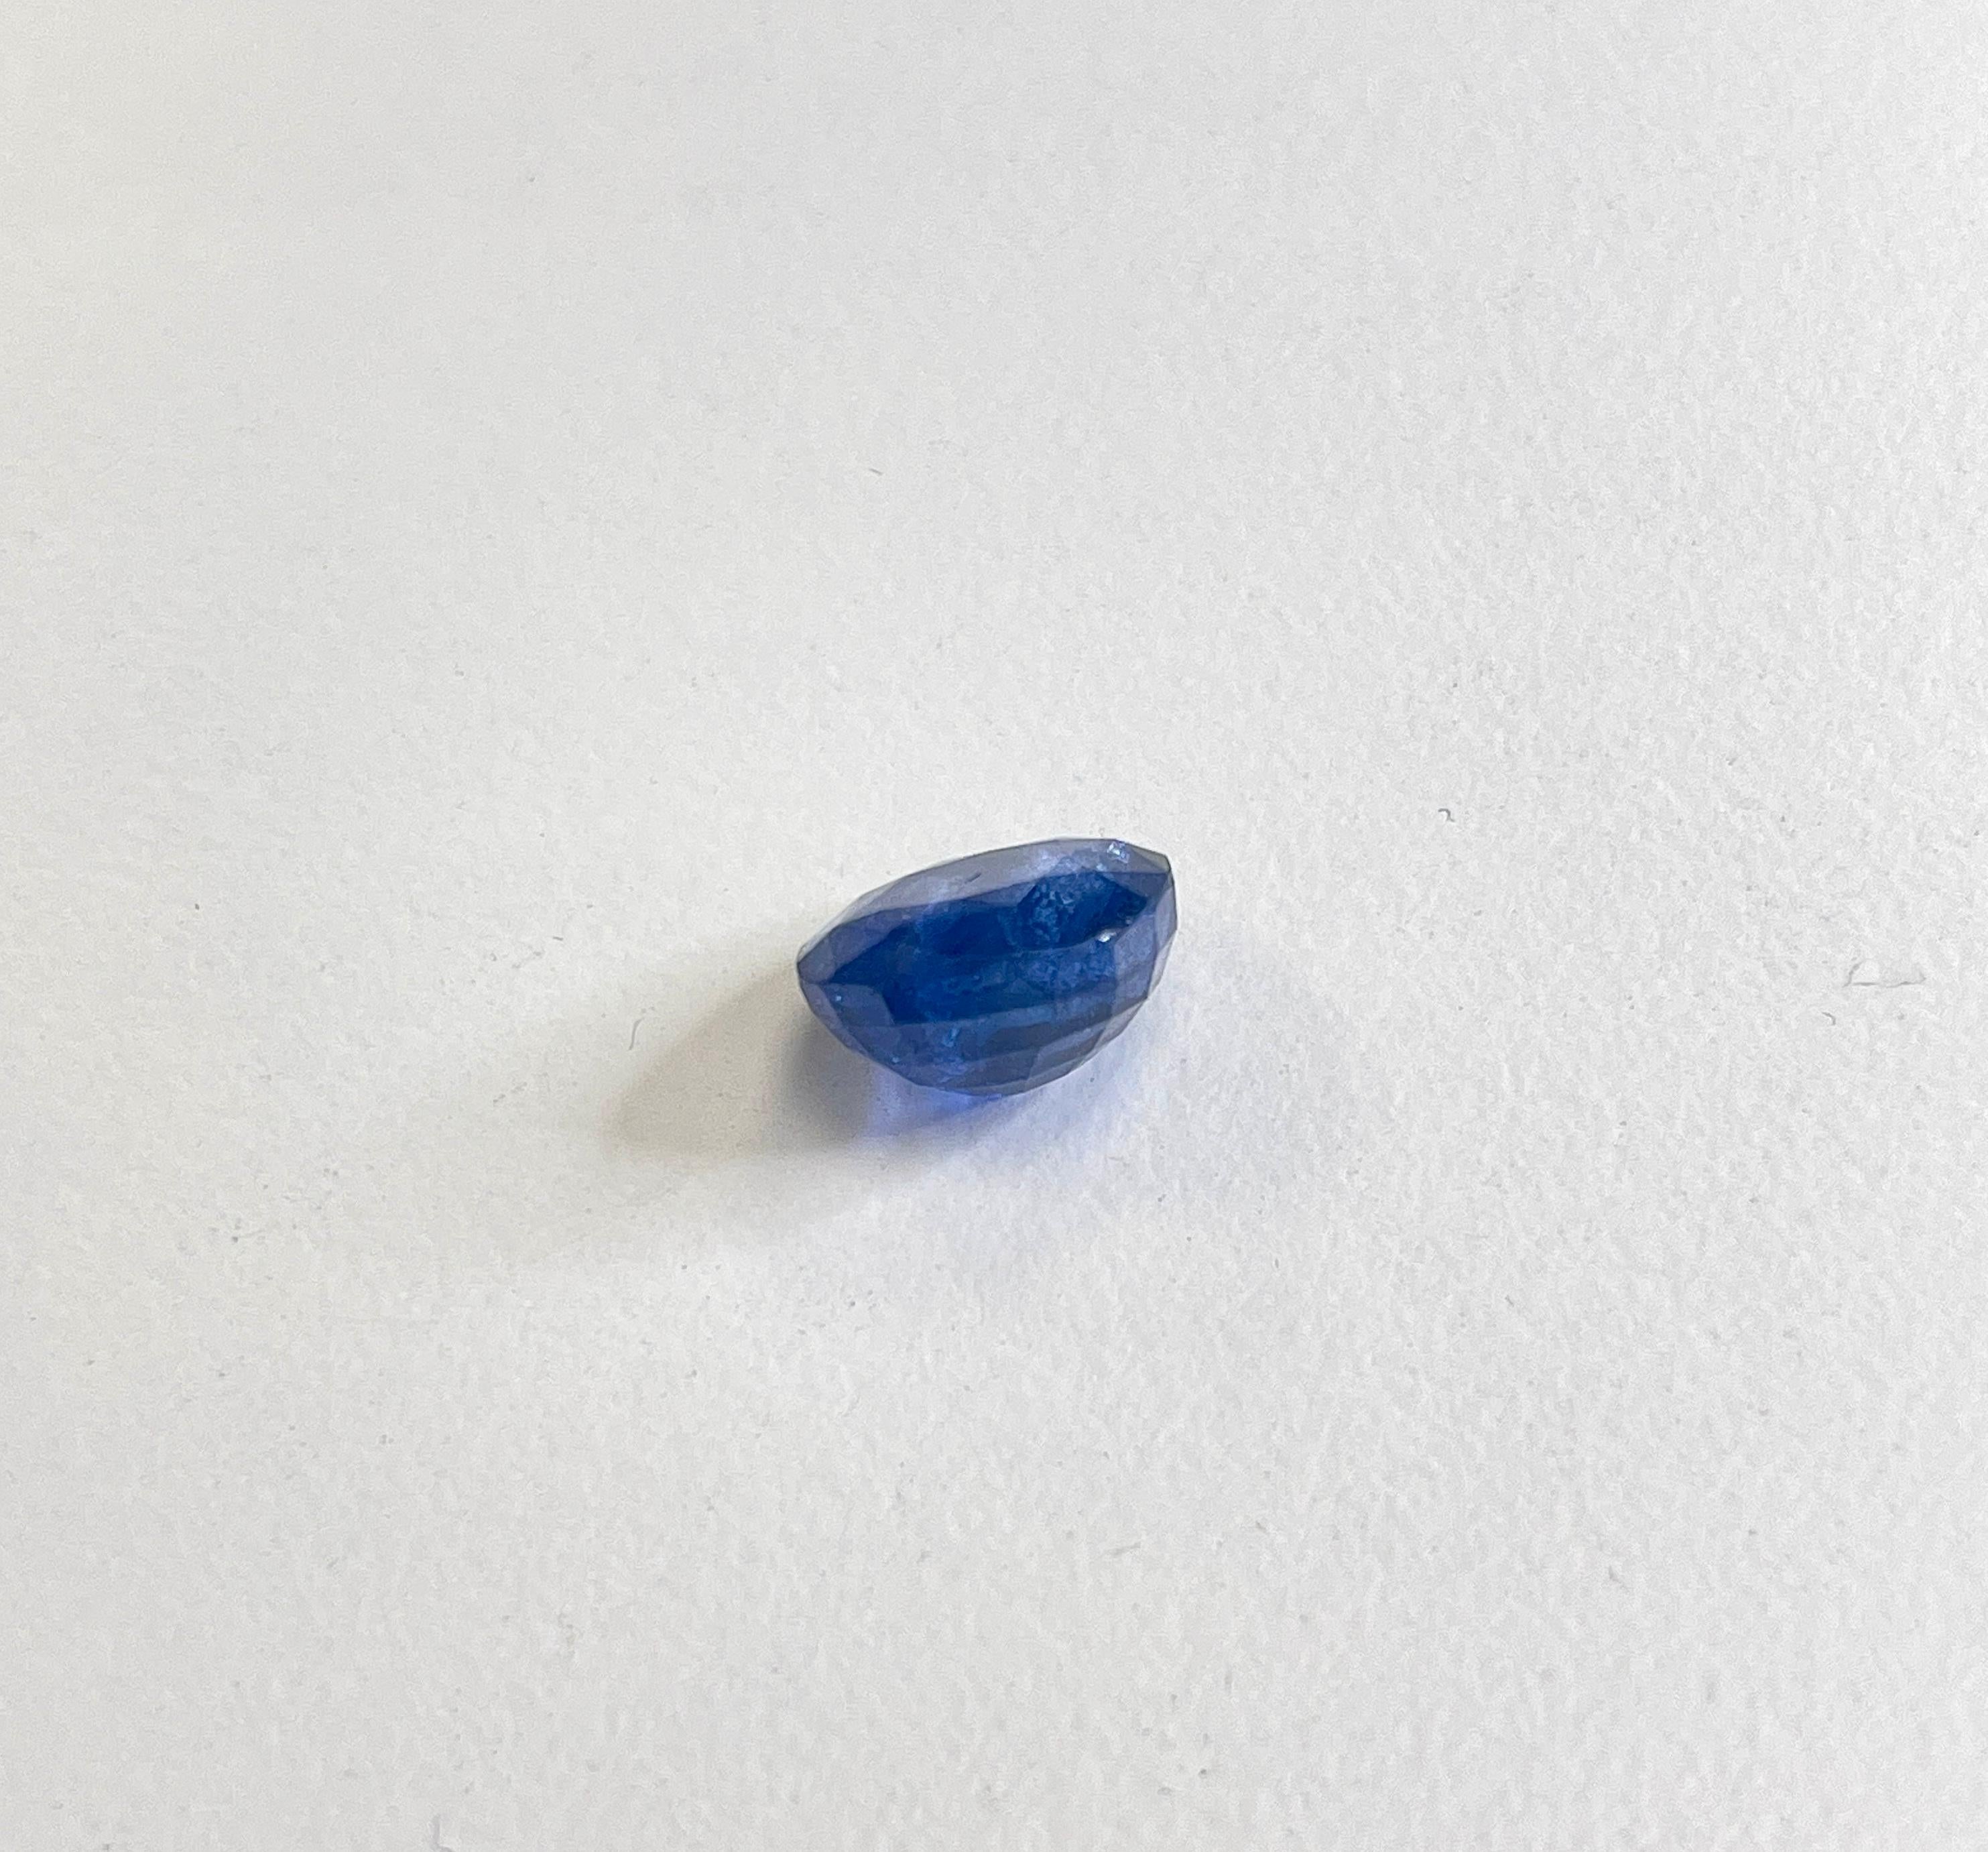 7.58 Carat Radiant Cut Intense Blue Natural Sapphire Loose Gemstone 2